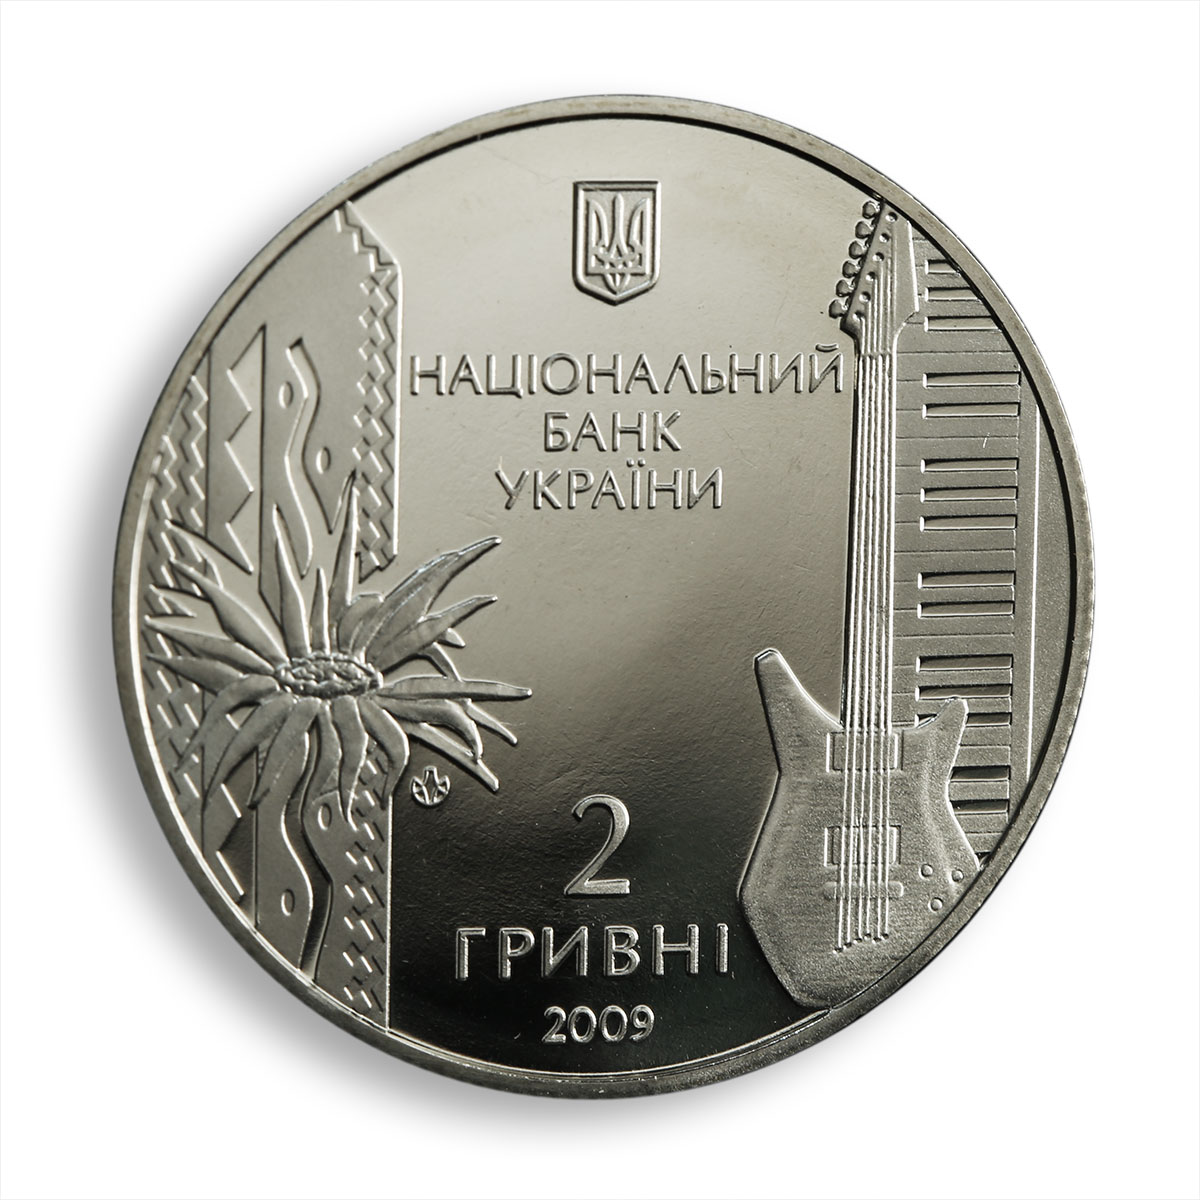 Ukraine 2 hryvnia Volodymyr Ivasiuk composer poet singer music nickel coin 2009